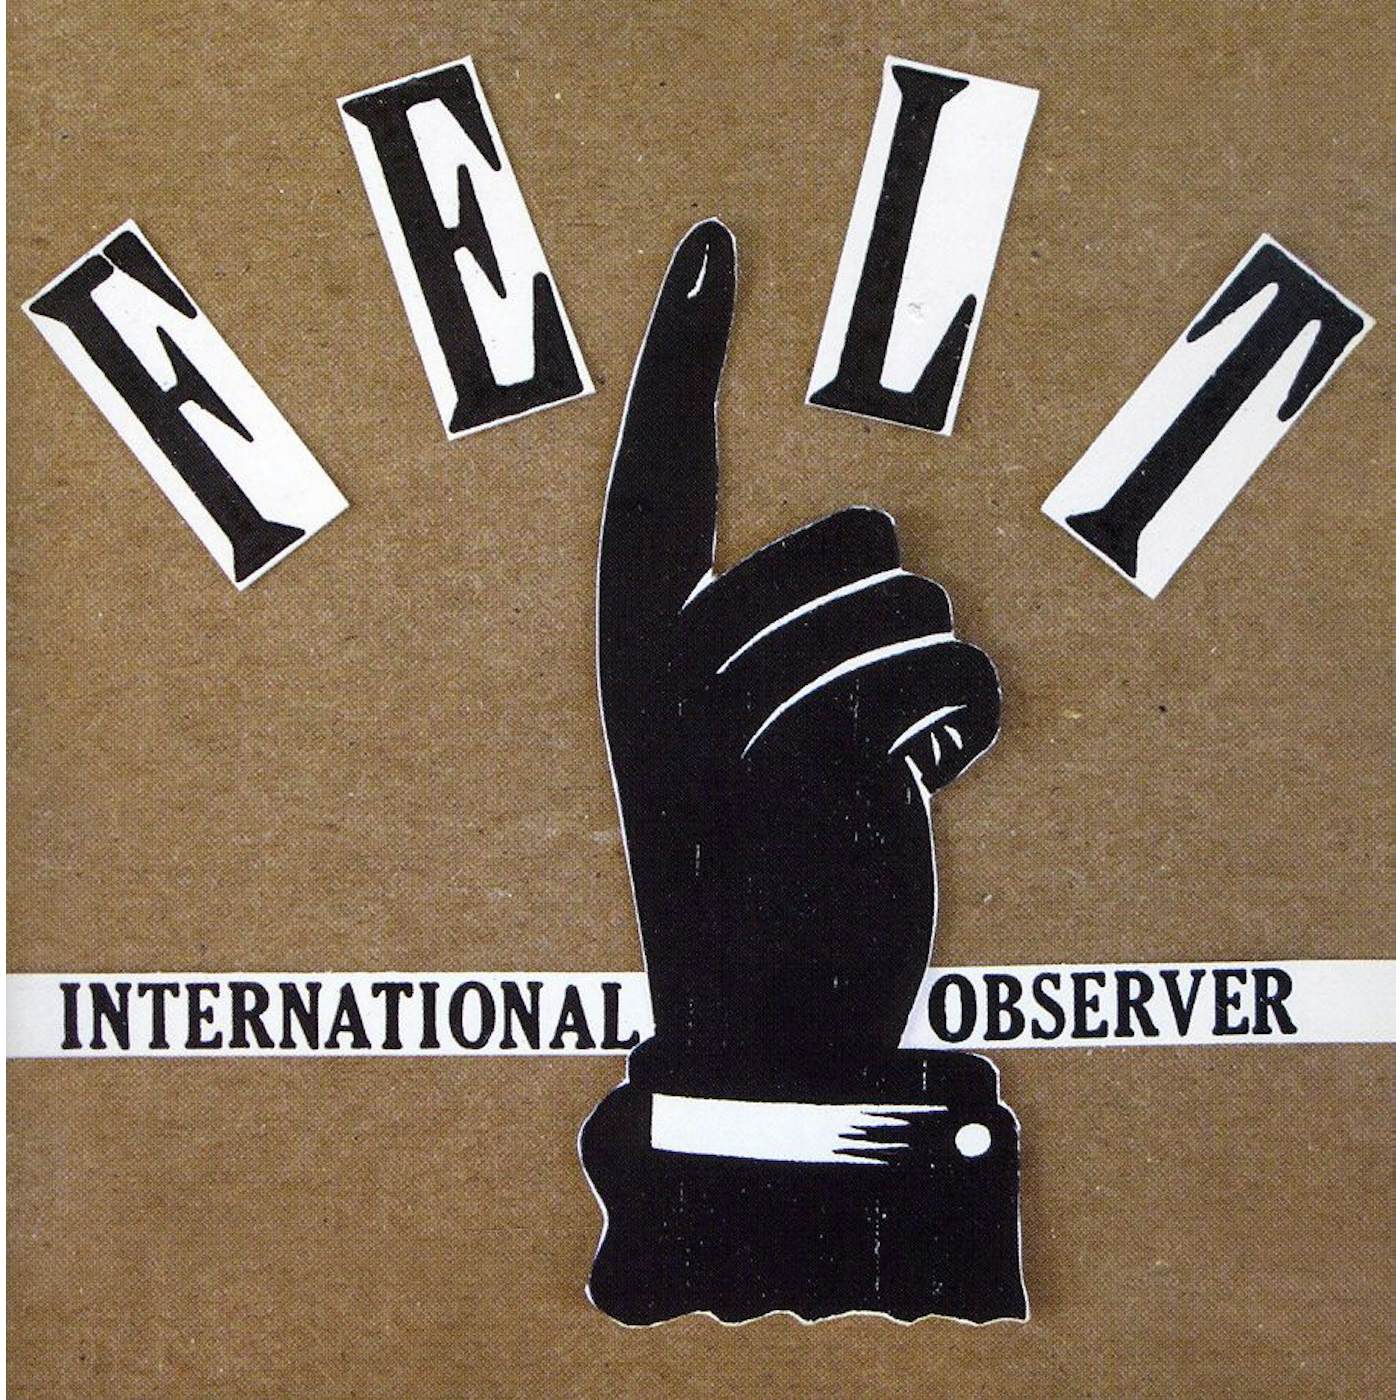 International Observer FELT CD